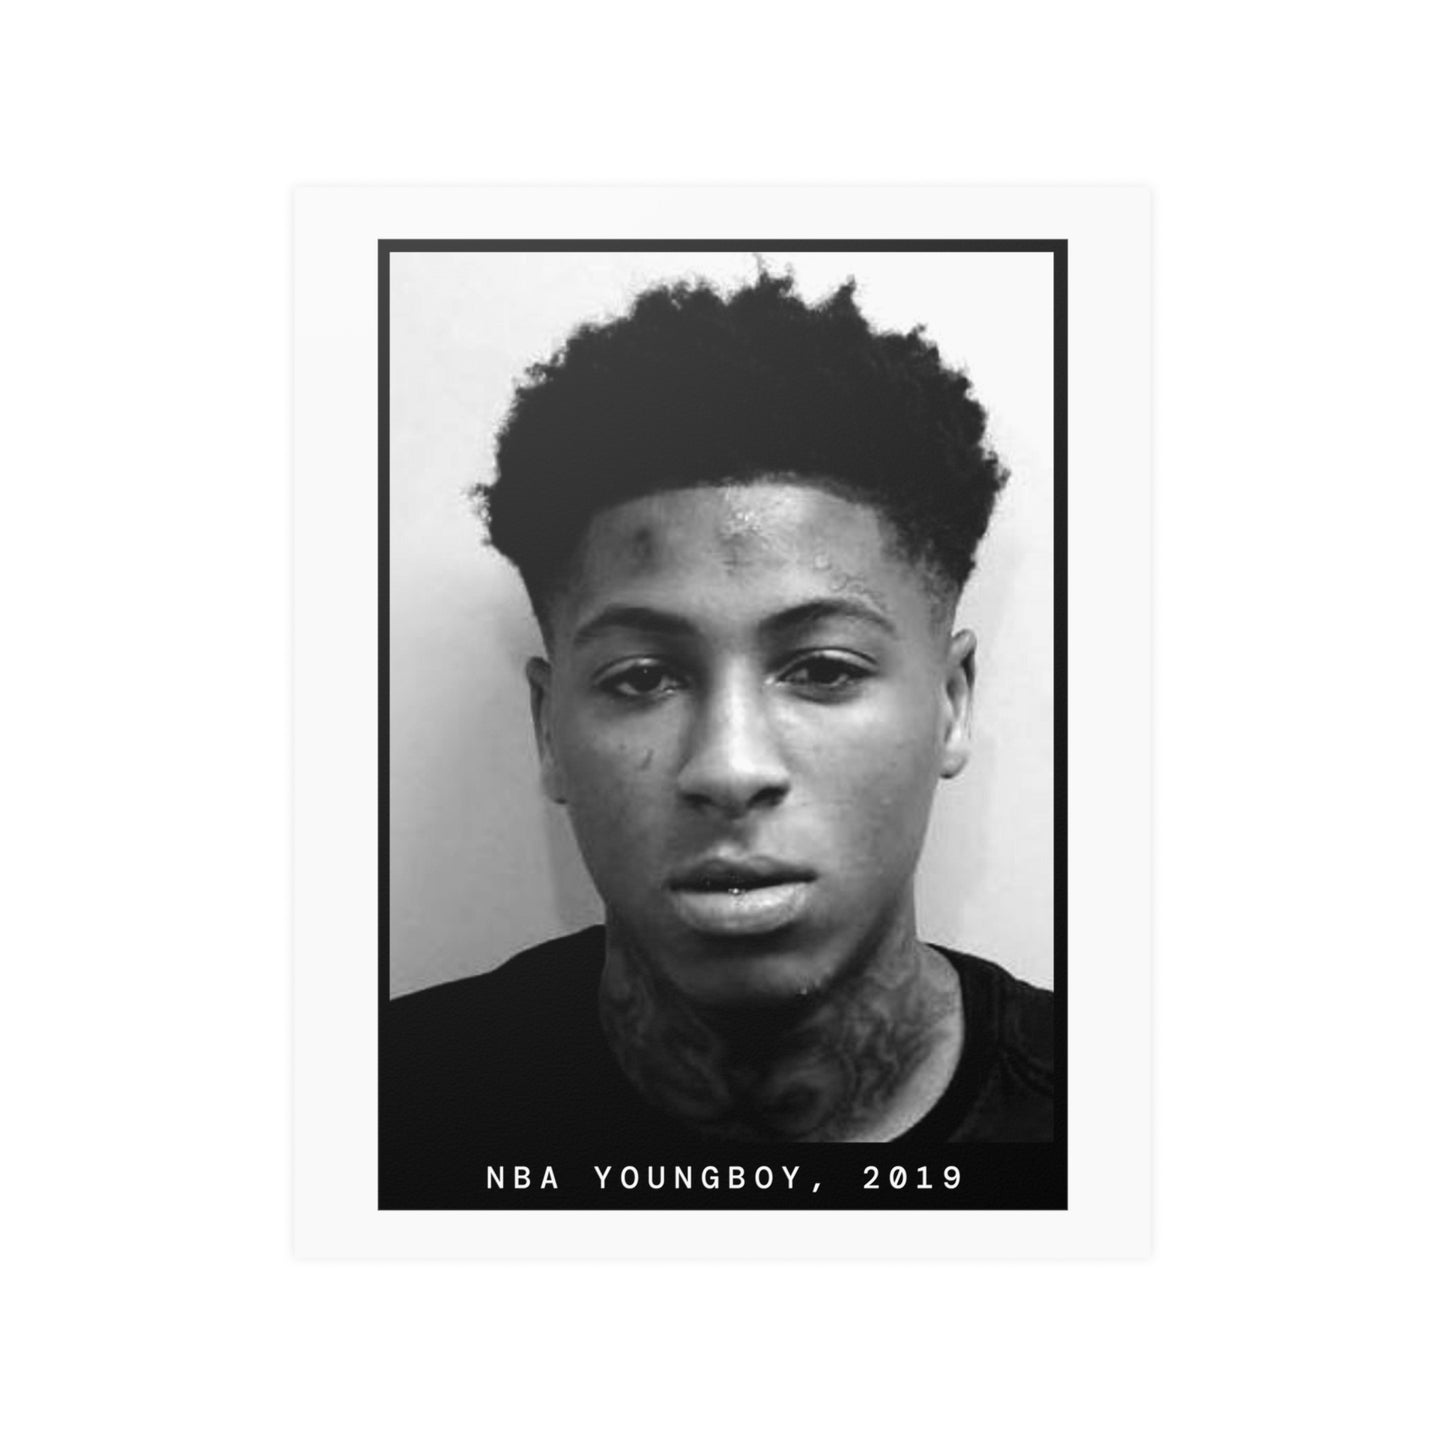 NBA Youngboy, 2019 Rapper Mugshot Poster